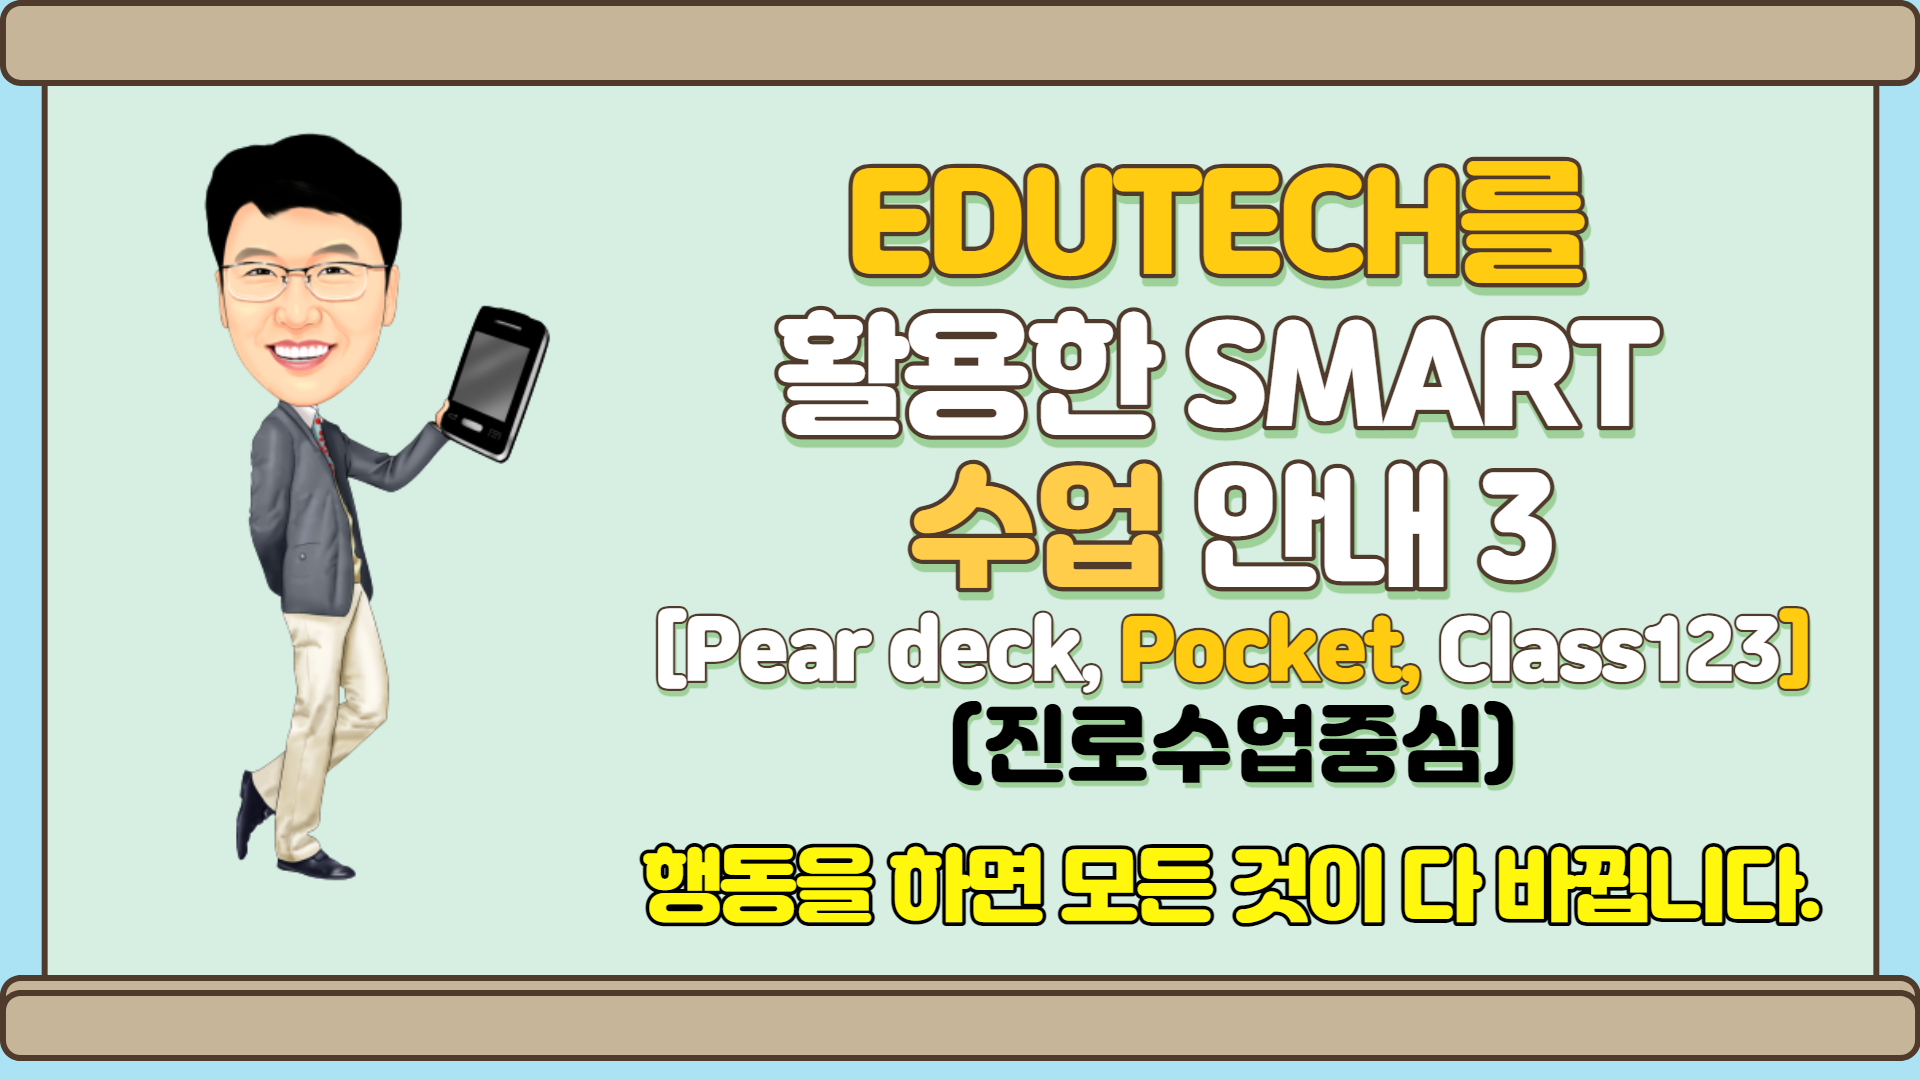 EDUTECH를 활용한 smart 수업 방법 안내 3(진로수업을 중심으로)(Pocket,class123,peardeck)